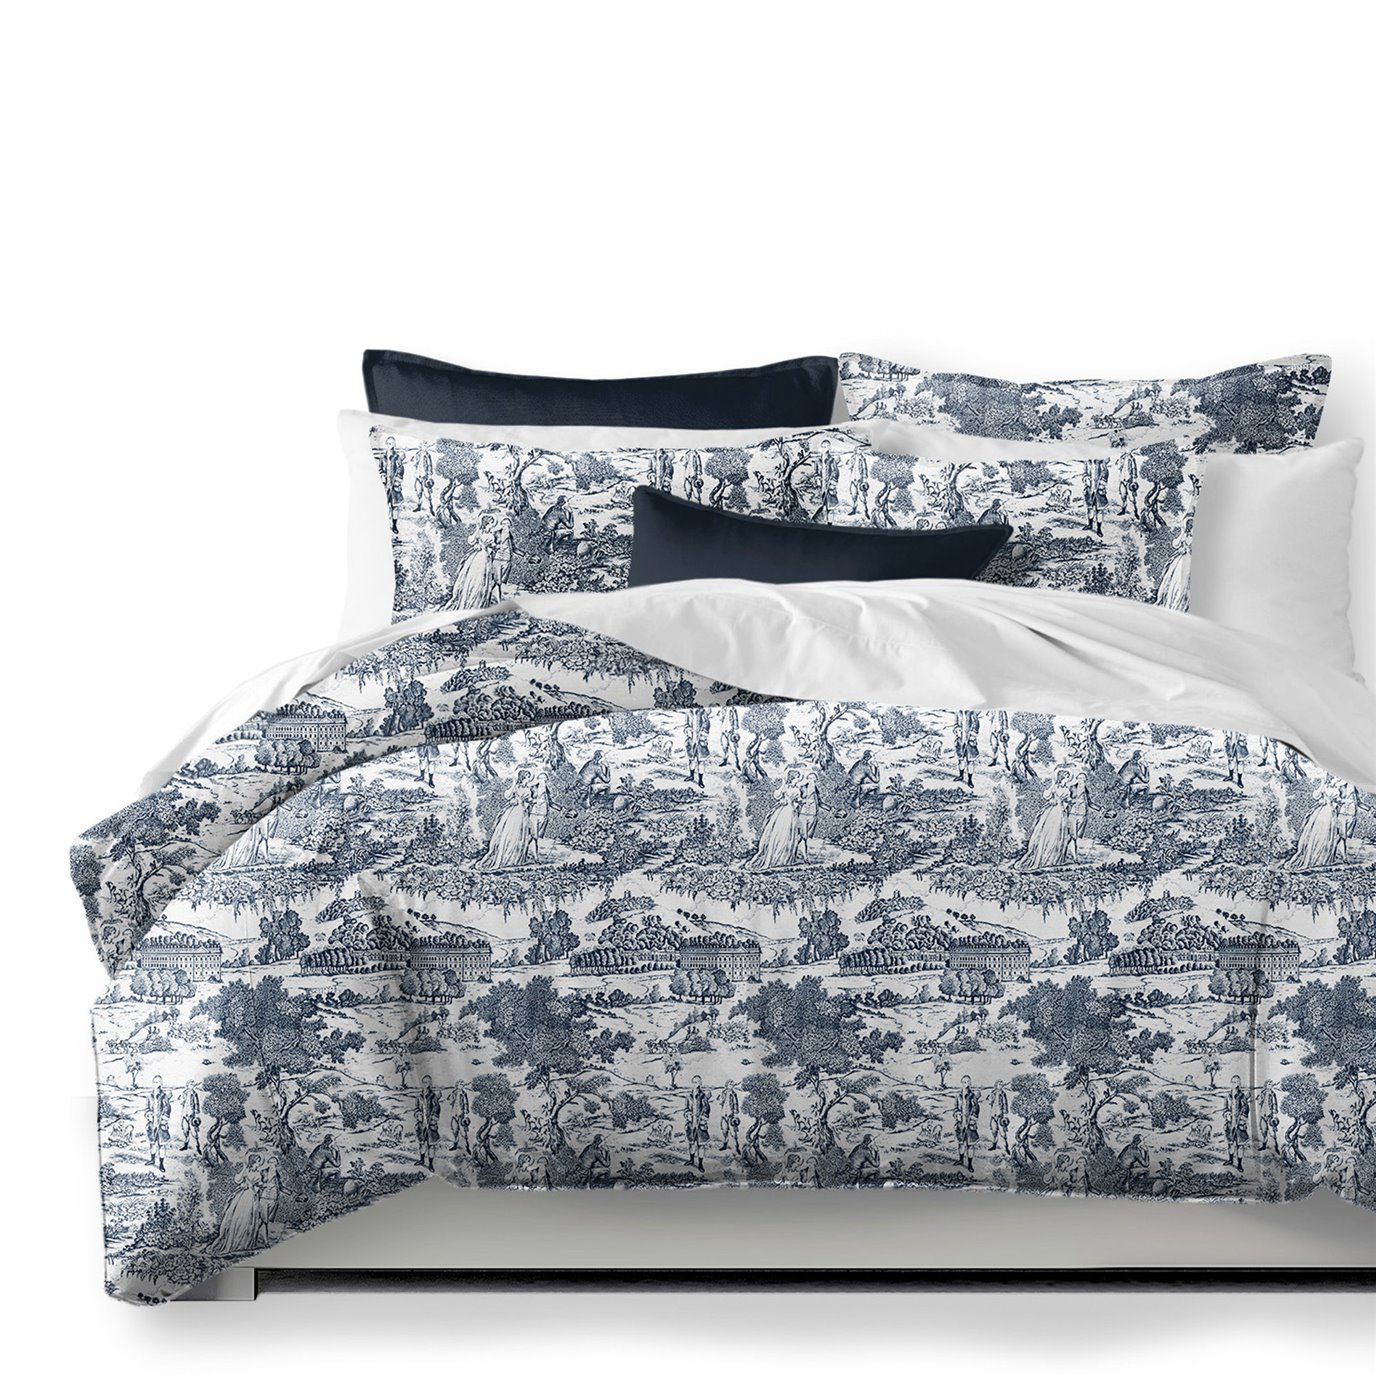 Beau Toile Blue Duvet Cover and Pillow Sham(s) Set - Size Full